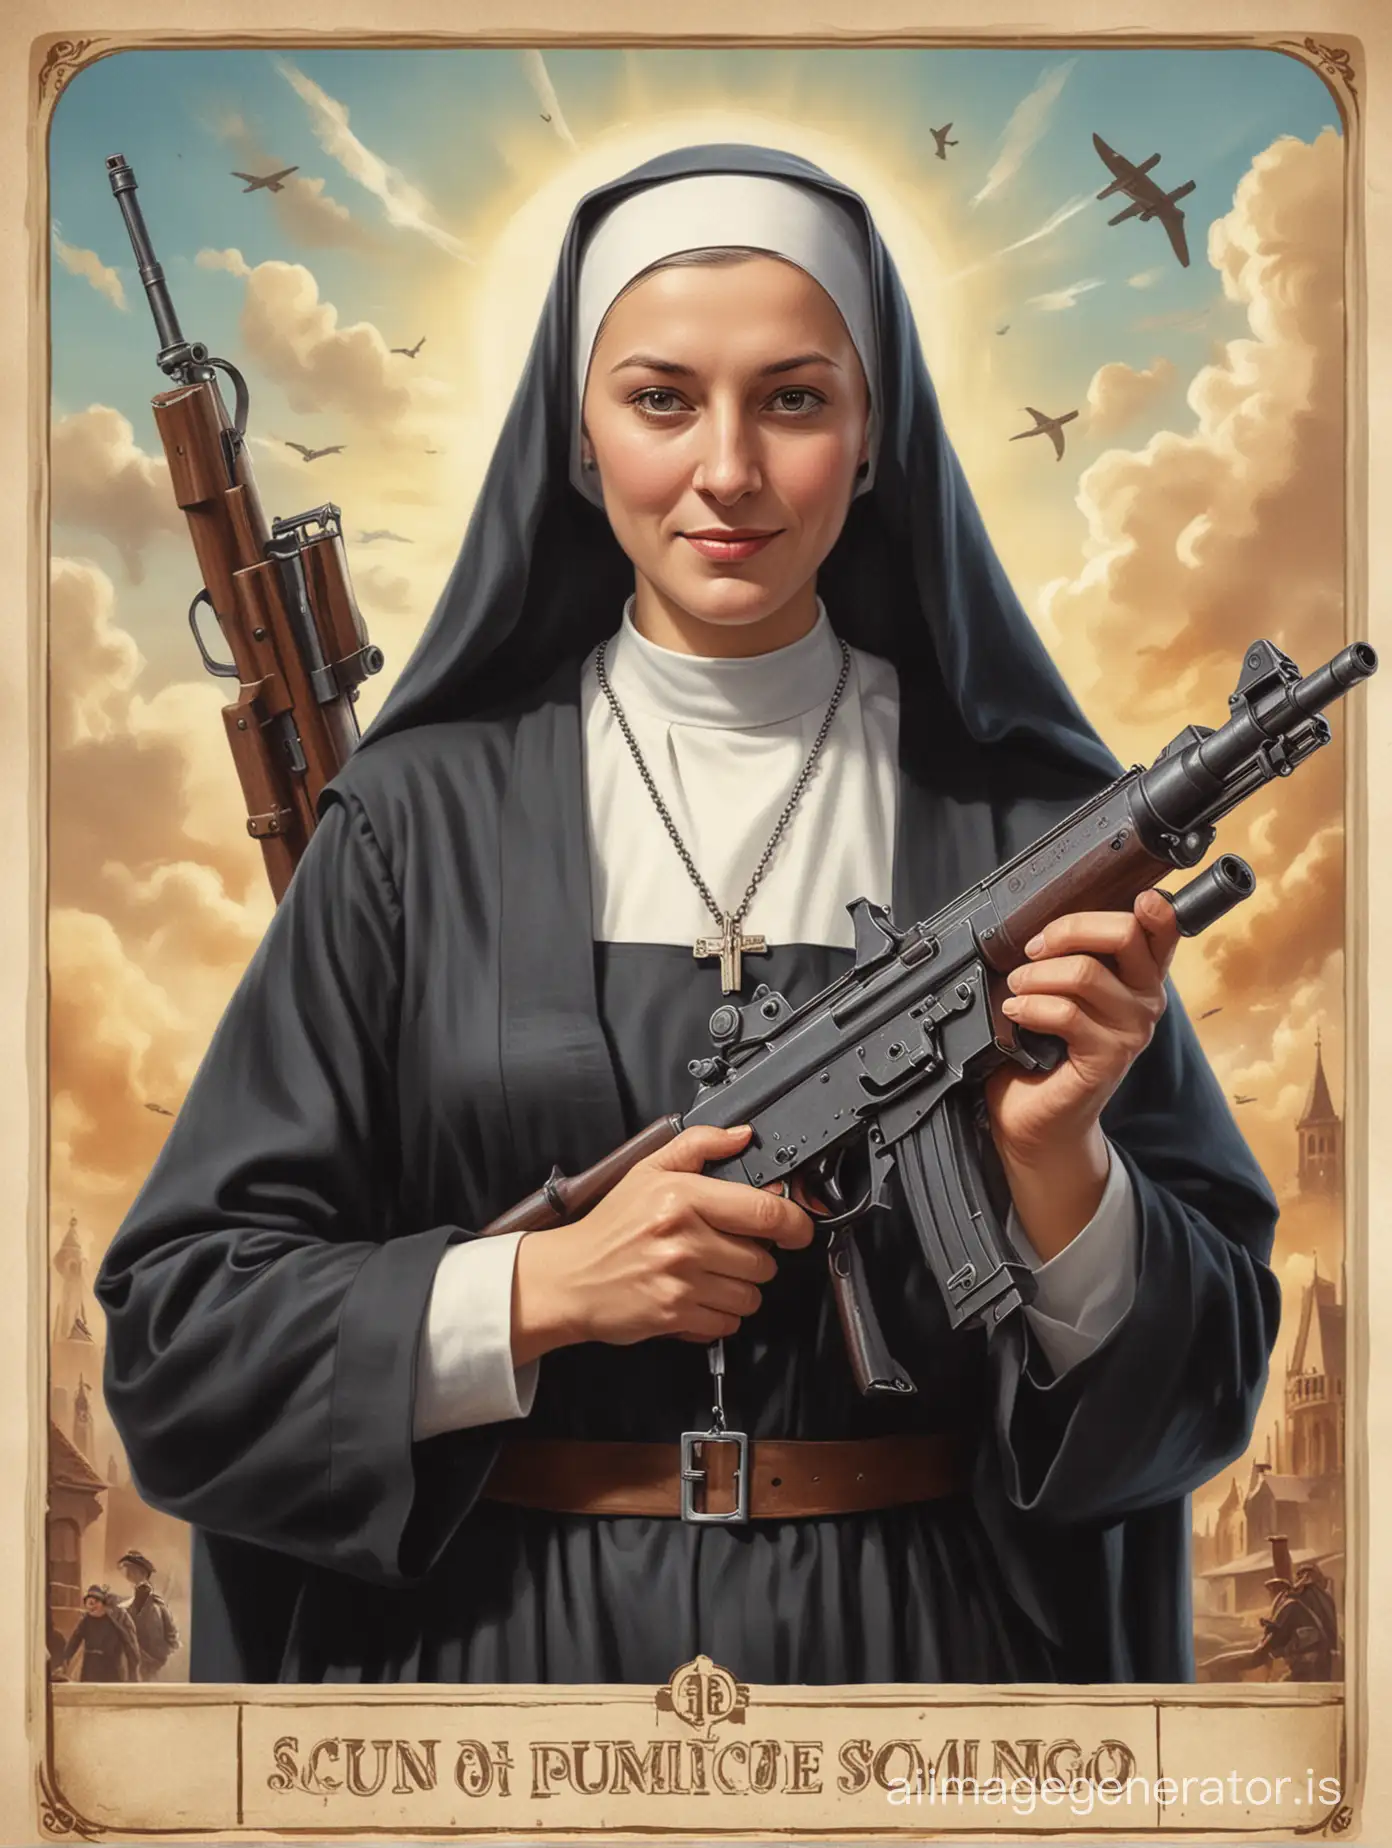 Nun-with-Submachine-Gun-Historical-Board-Game-Card-Art